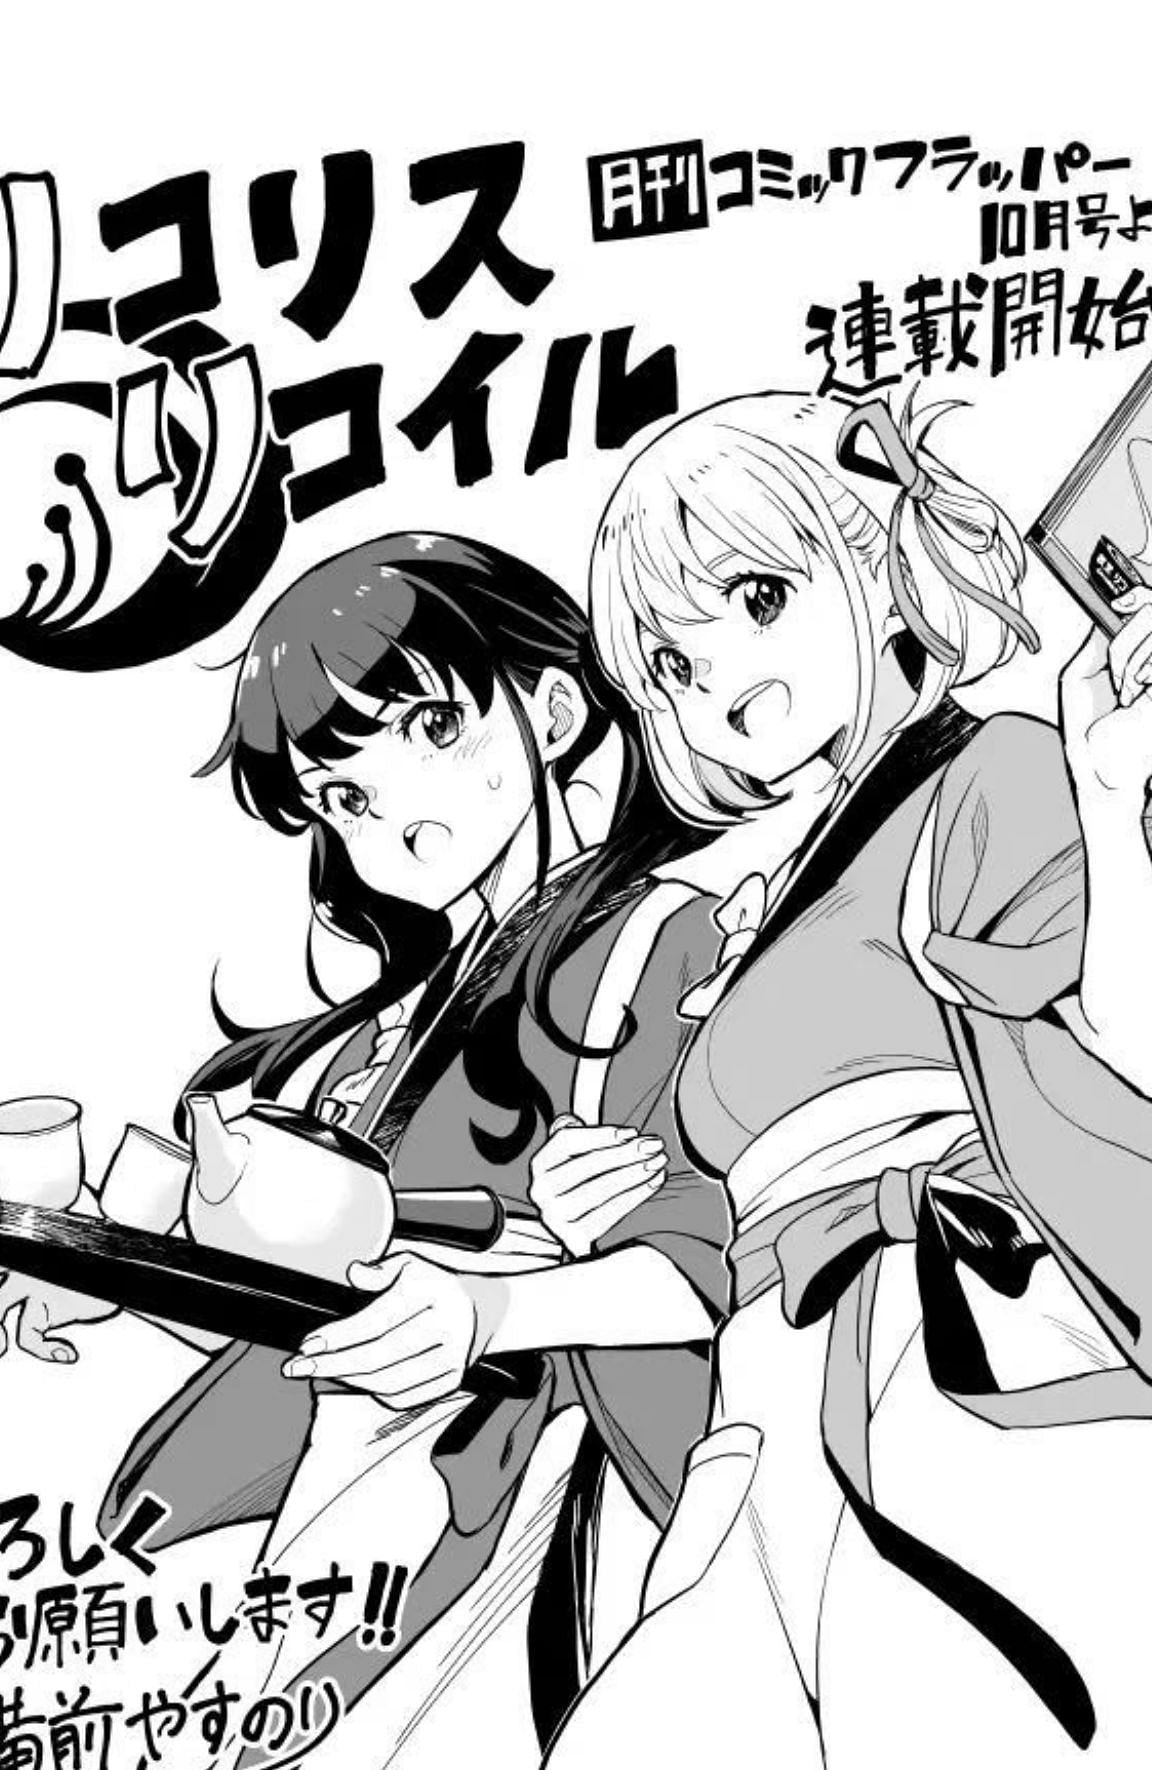 Manga illustration featuring Chisato and Takina (Image via Monthly Comic Flapper)